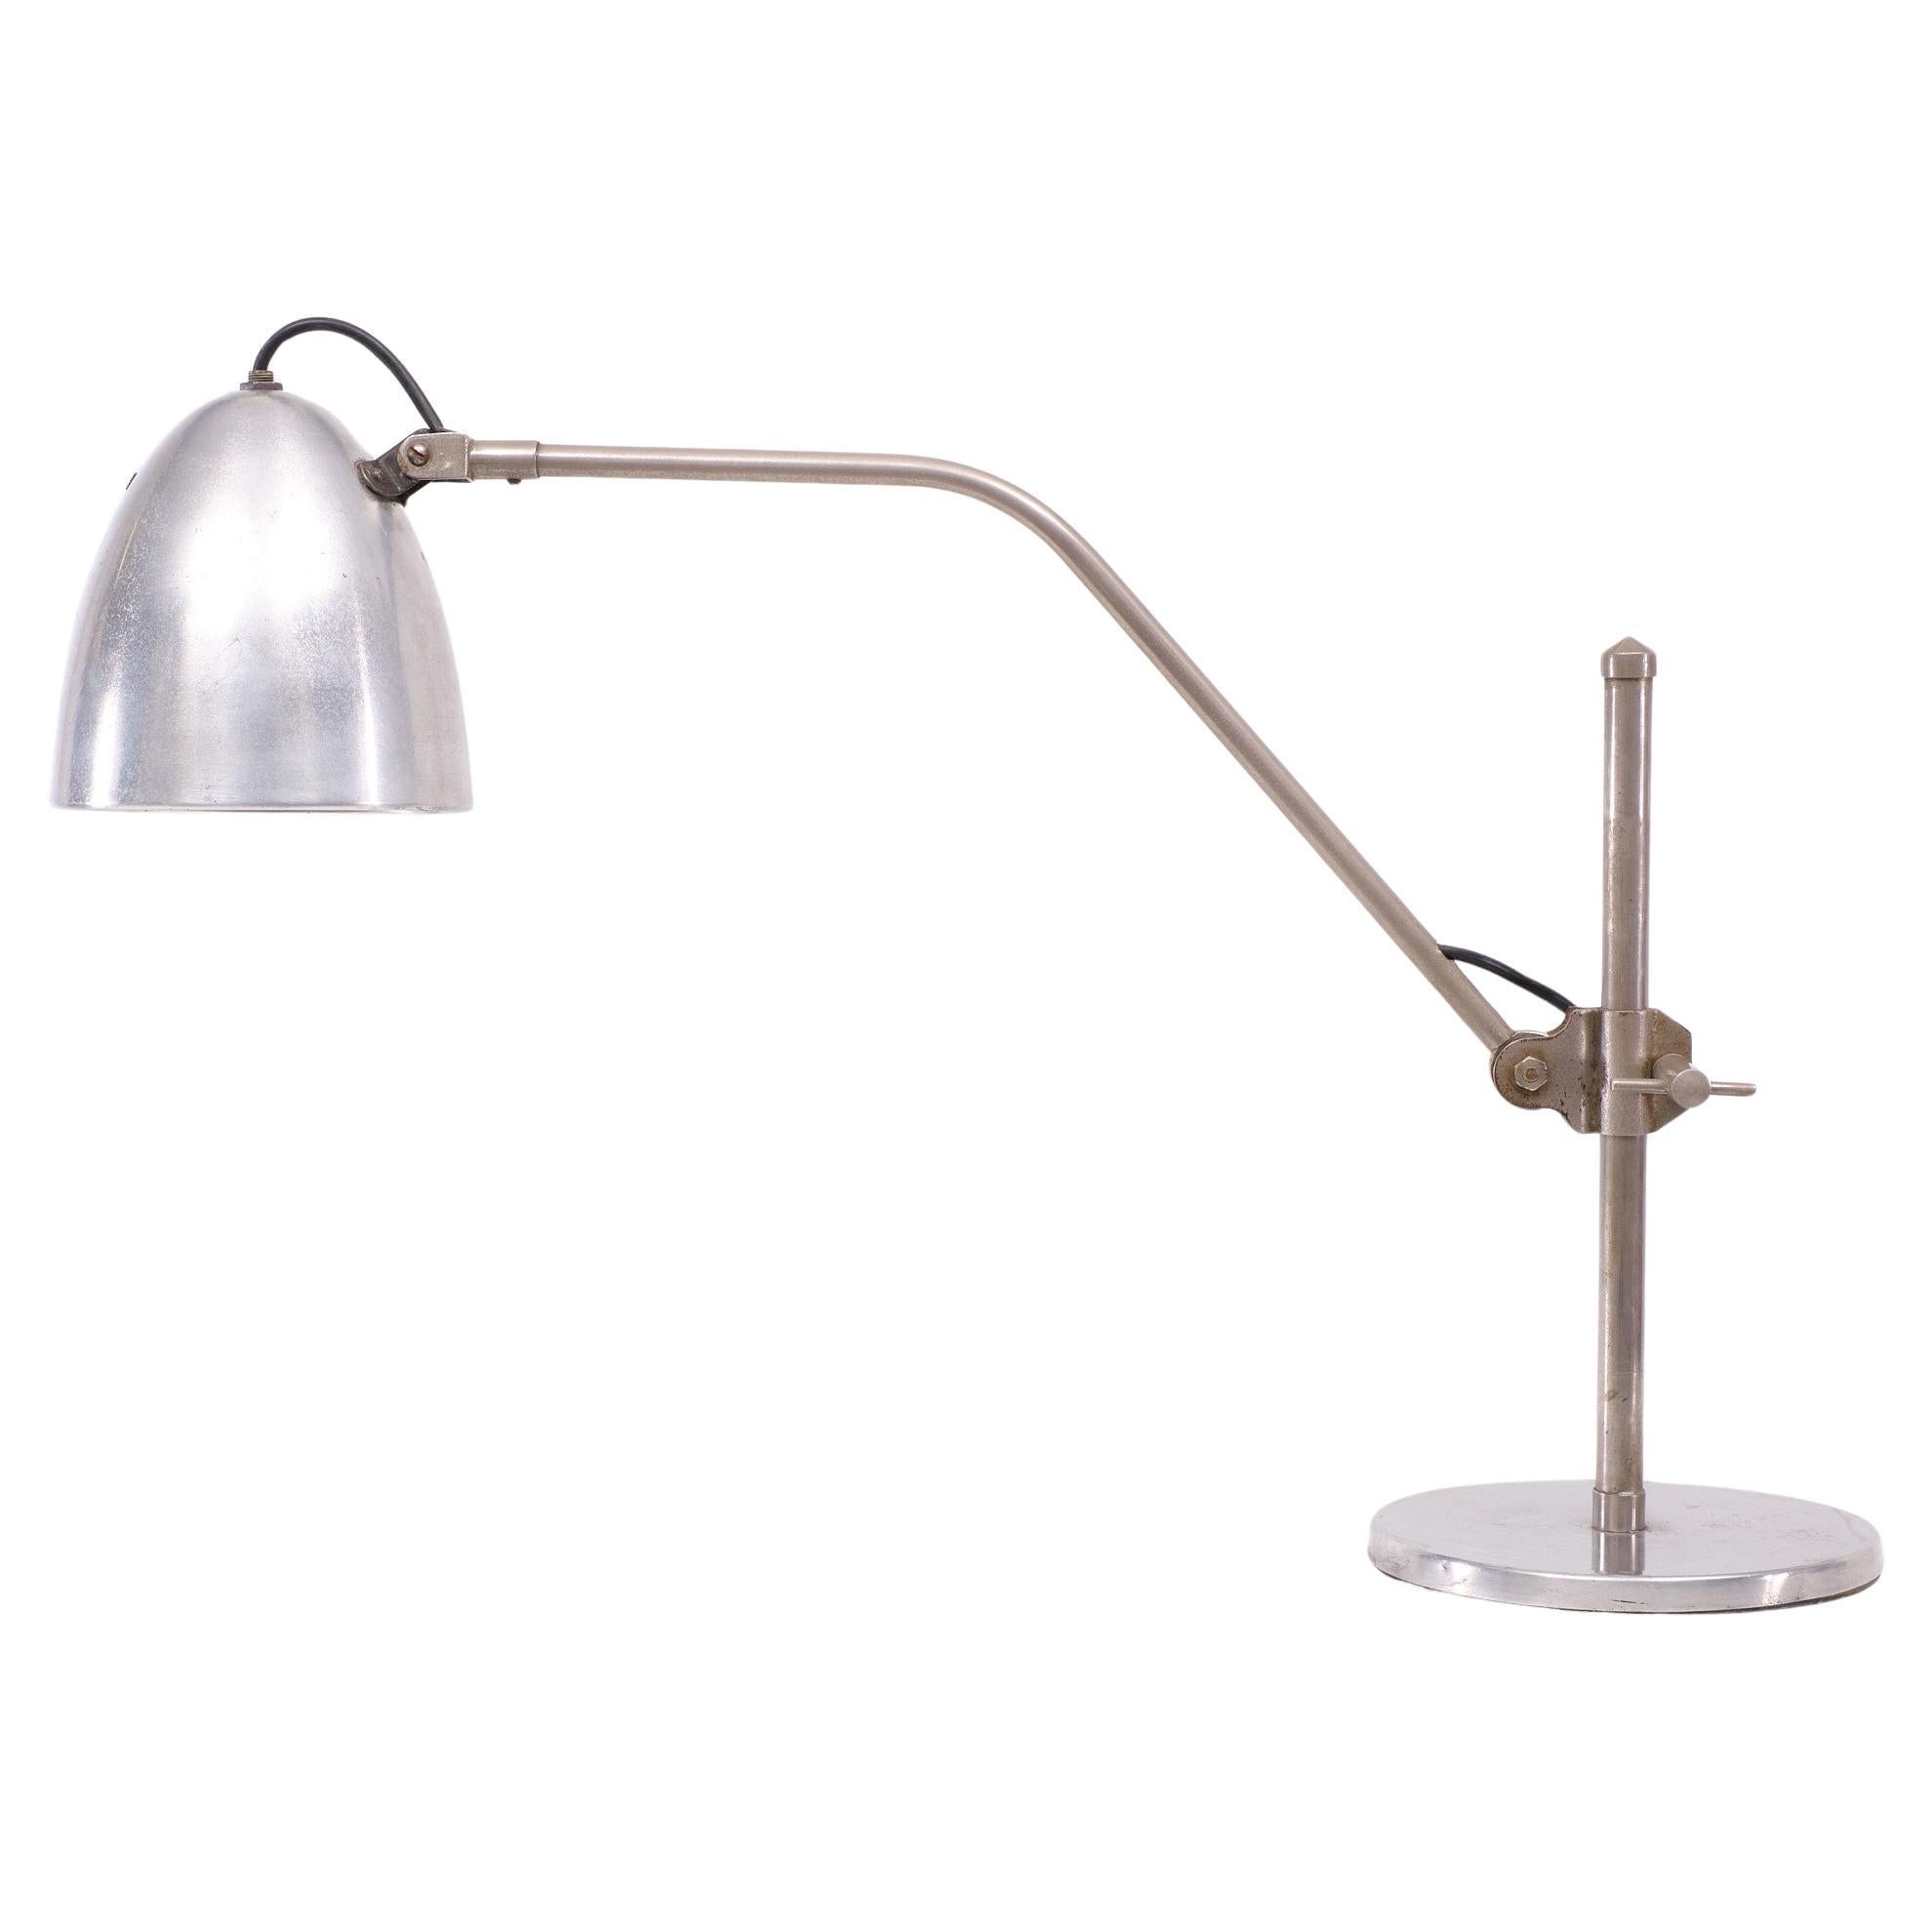 Christian Dell  Bauhaus Desk lamp 1930s Germany  For Sale